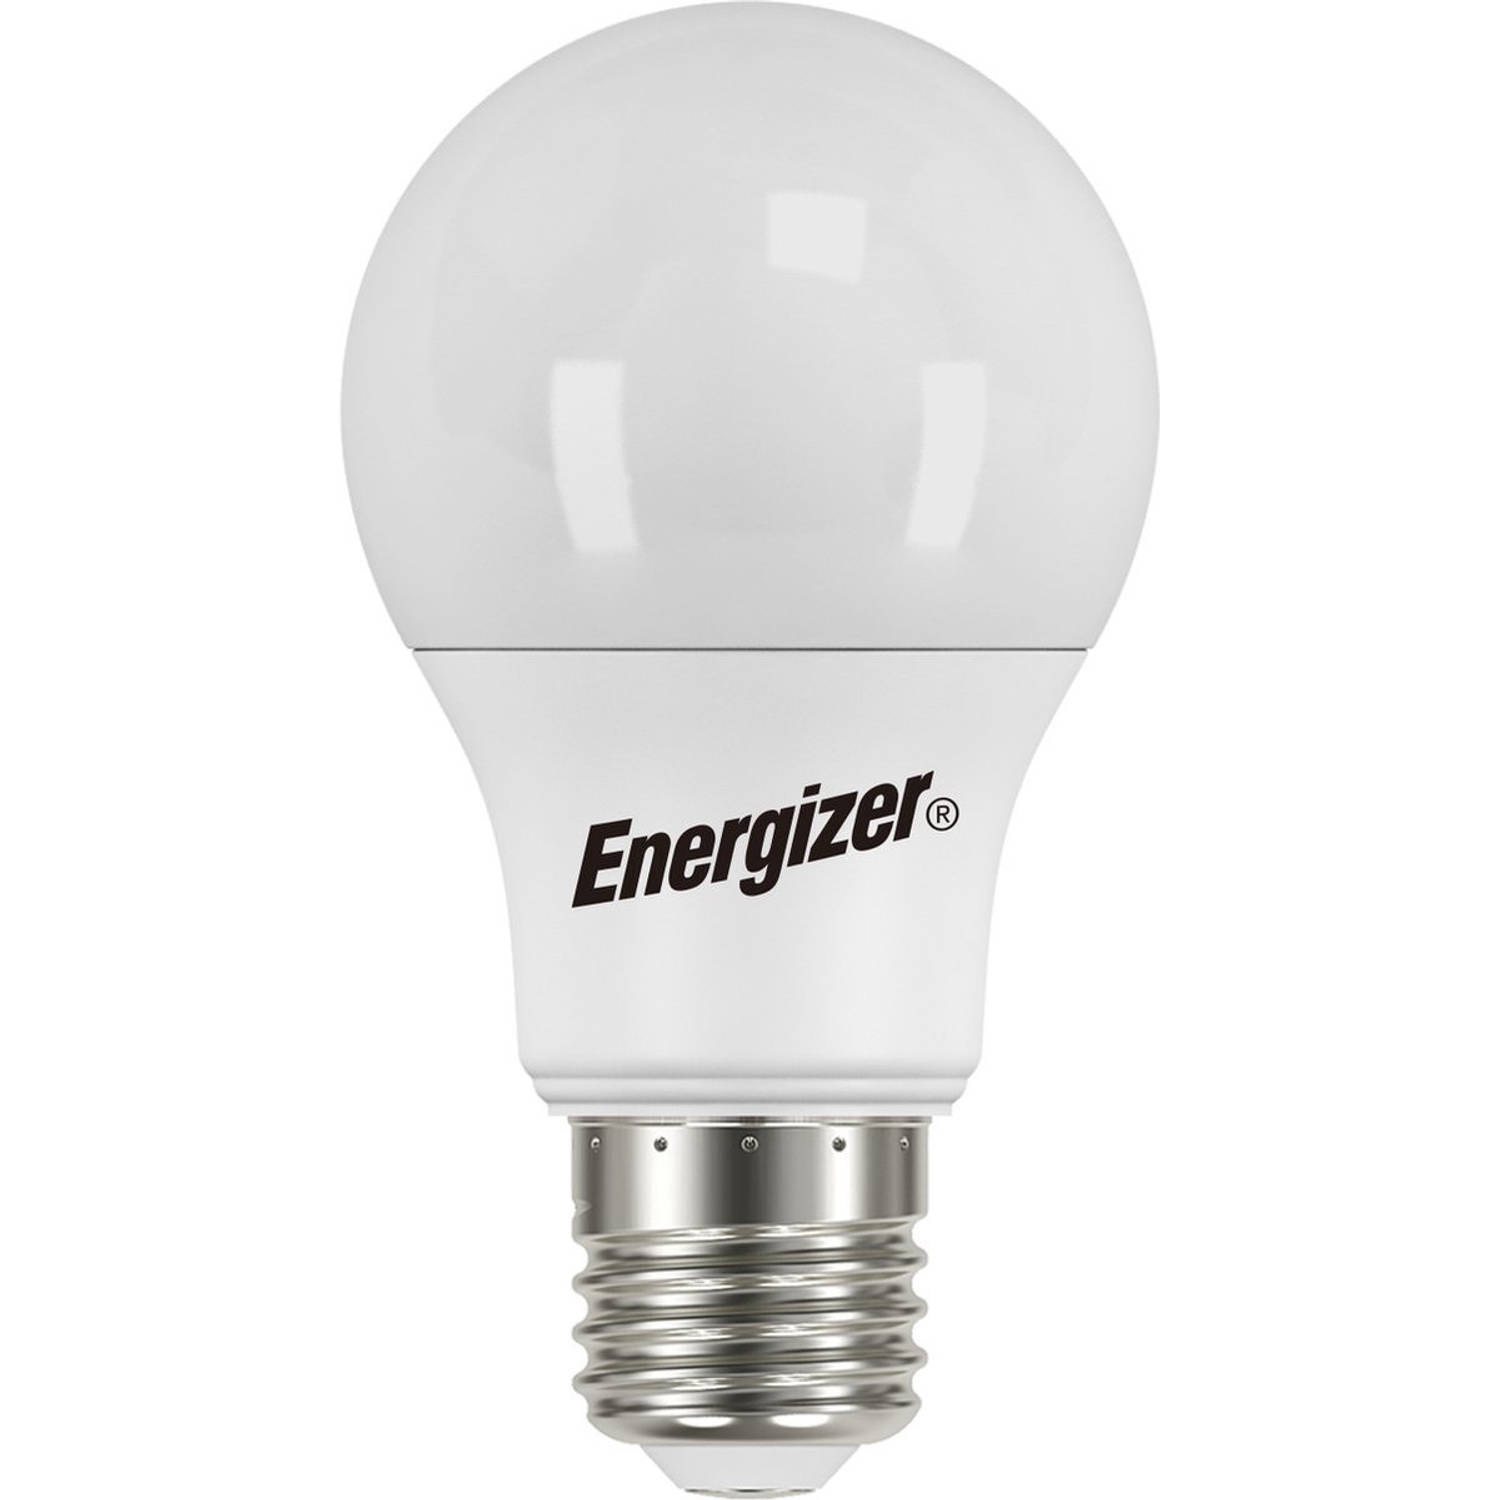 Energizer energiezuinige Led lamp -E27 - 8,8 Watt - warmwit licht - dimbaar - 1 stuk